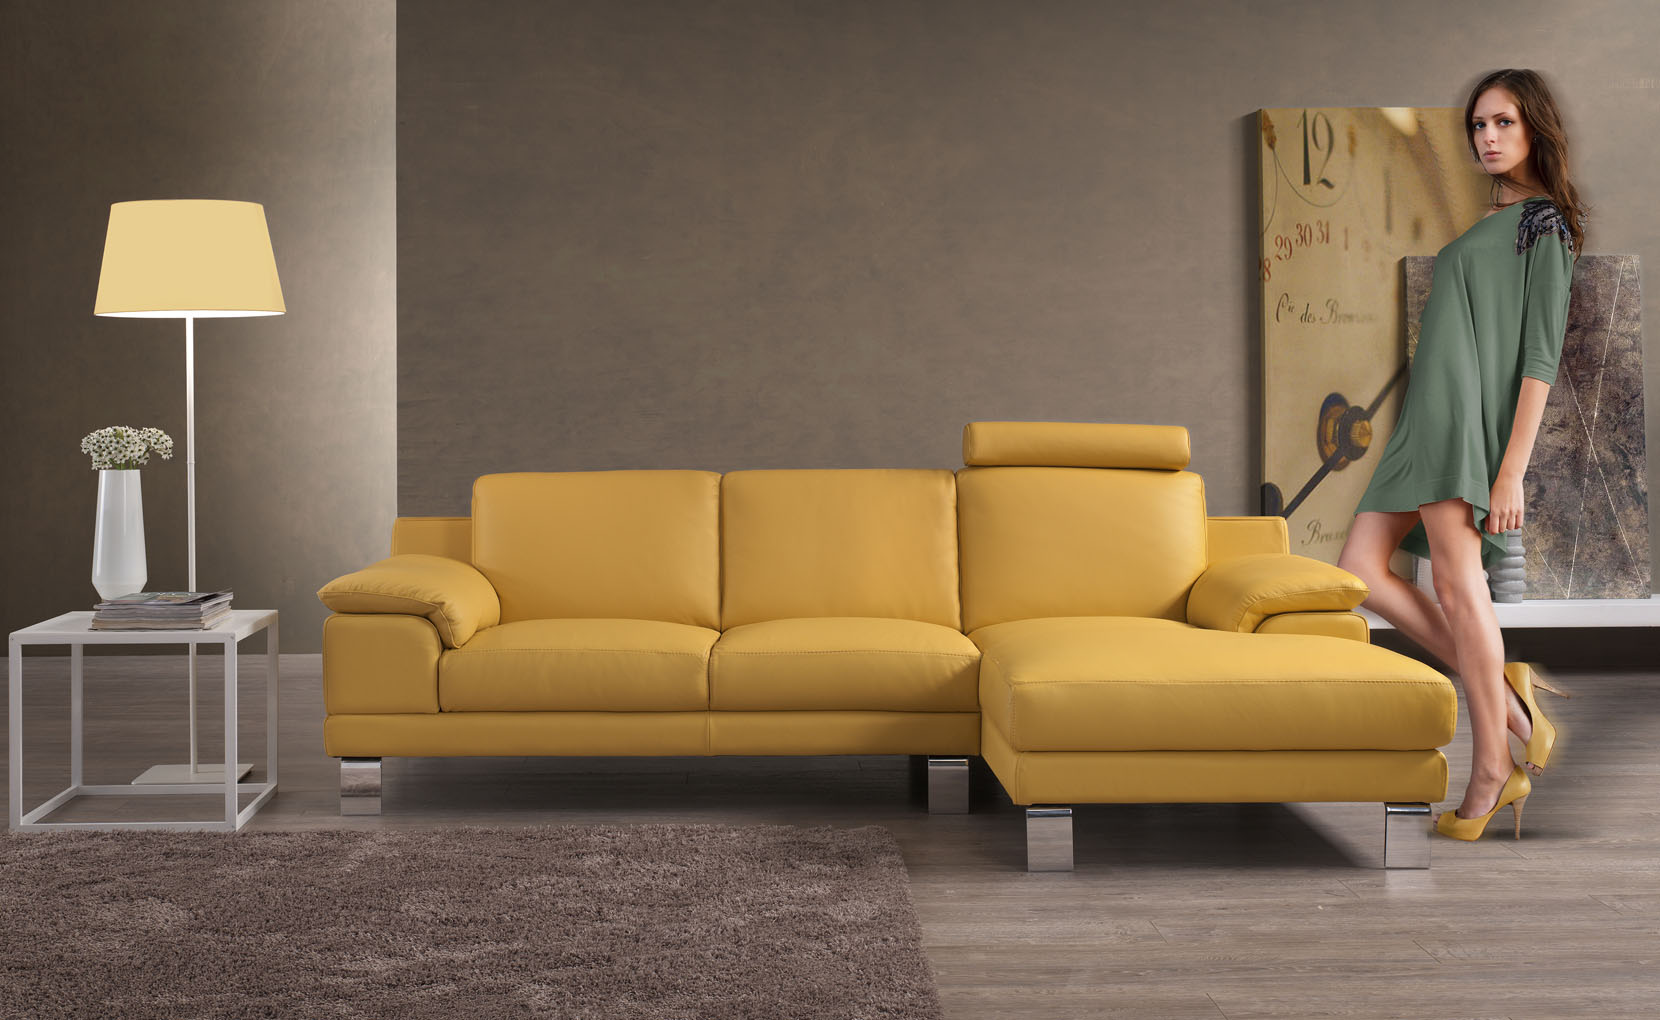 Sofa The Free Ultimate Company. available Italiano at Ego Living